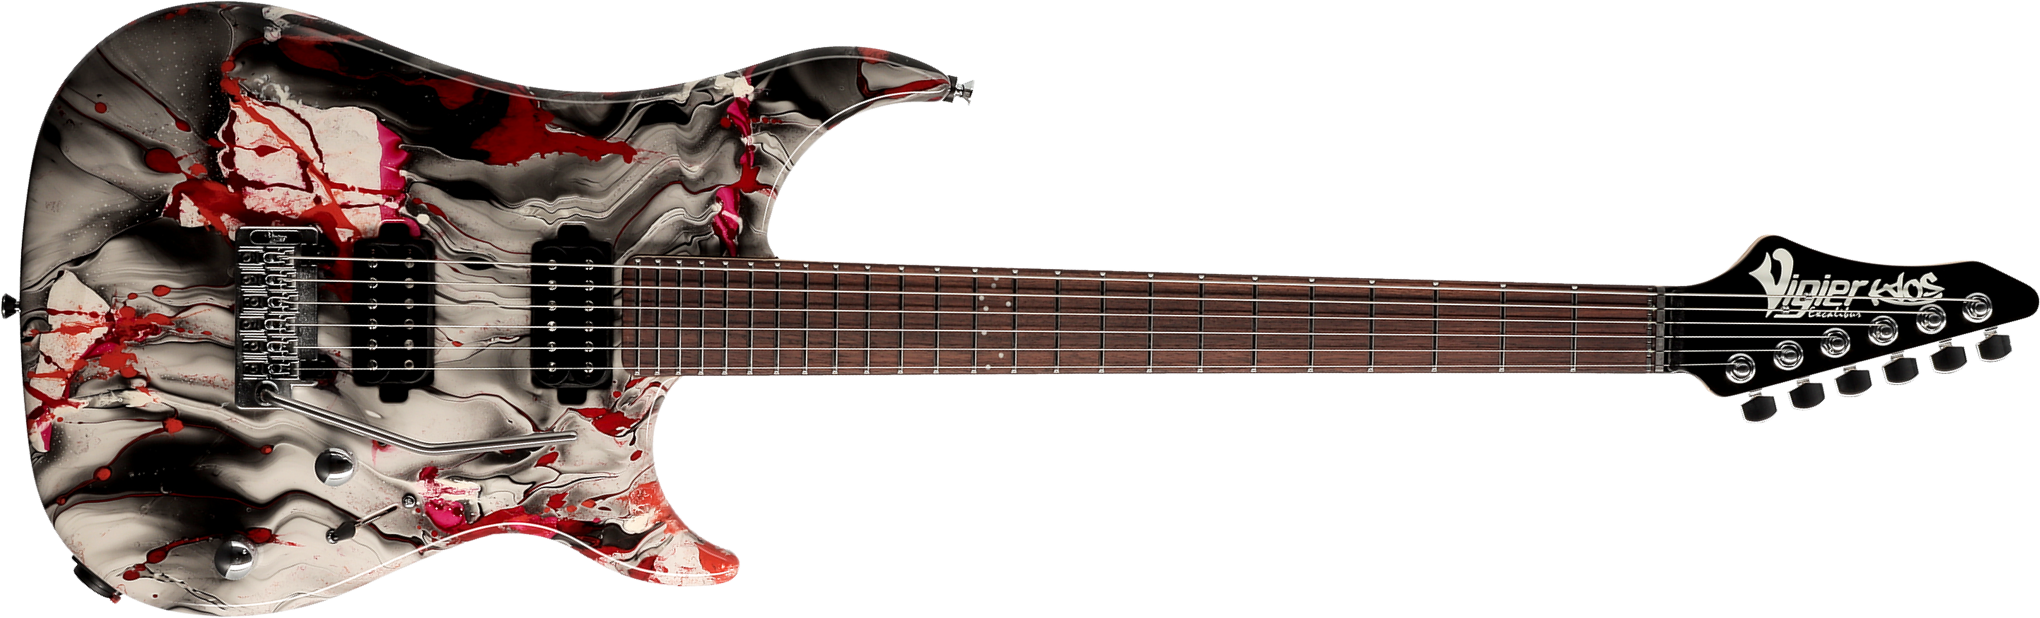 Vigier Excalibur Kaos 2h Trem Rw - Rock Art Chrome Black Red - Elektrische gitaar in Str-vorm - Main picture